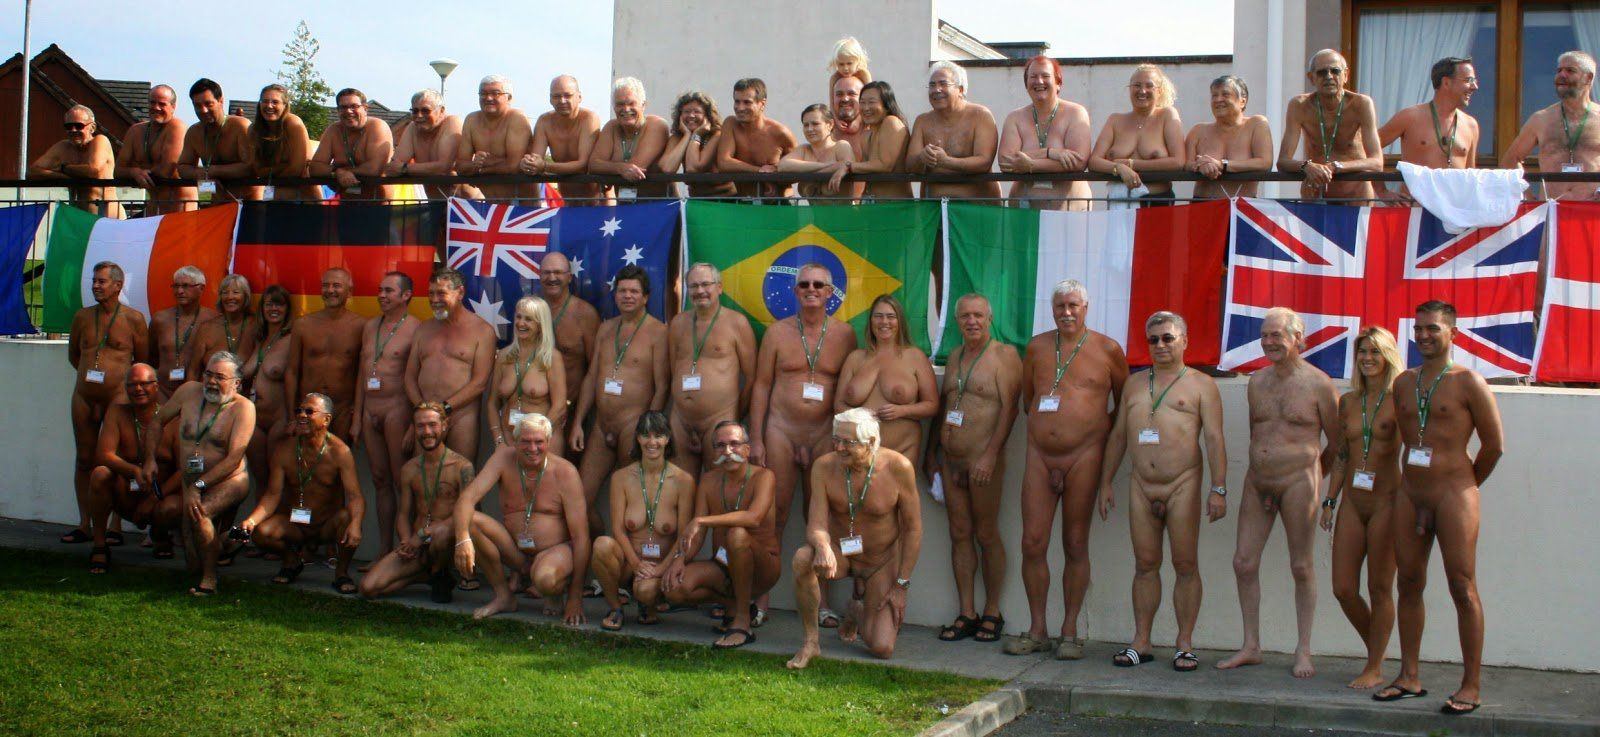 Nudist and naturist contests